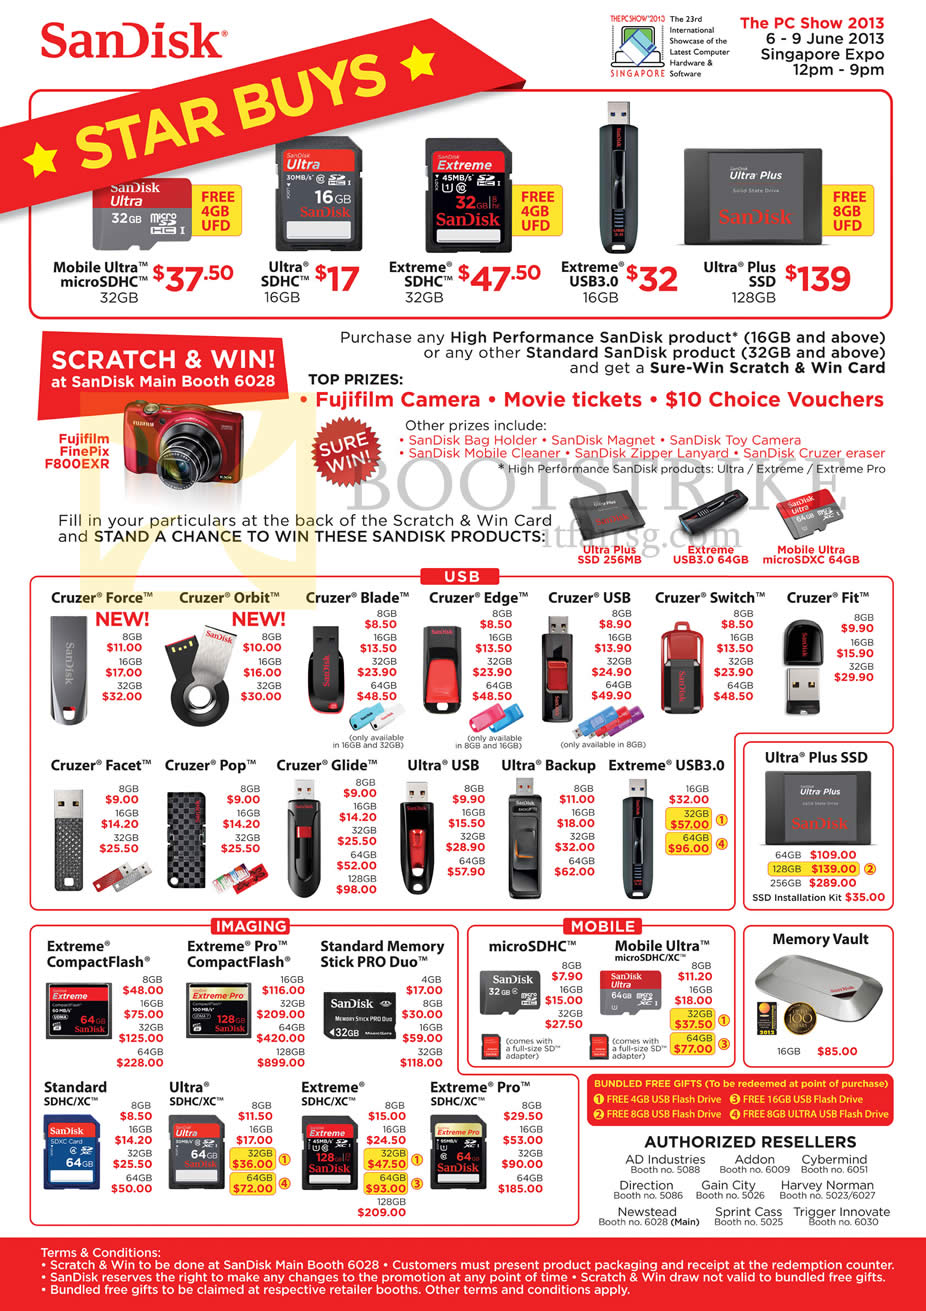 PC SHOW 2013 price list image brochure of Sandisk Flash Memory, USB Drives, MicroSDHC, SSD, Cruzer Force, Orbit, Blade, Edge, Fit, Pop, Glide, Ultra, Backup, CompactFlash CF, Memory Vault